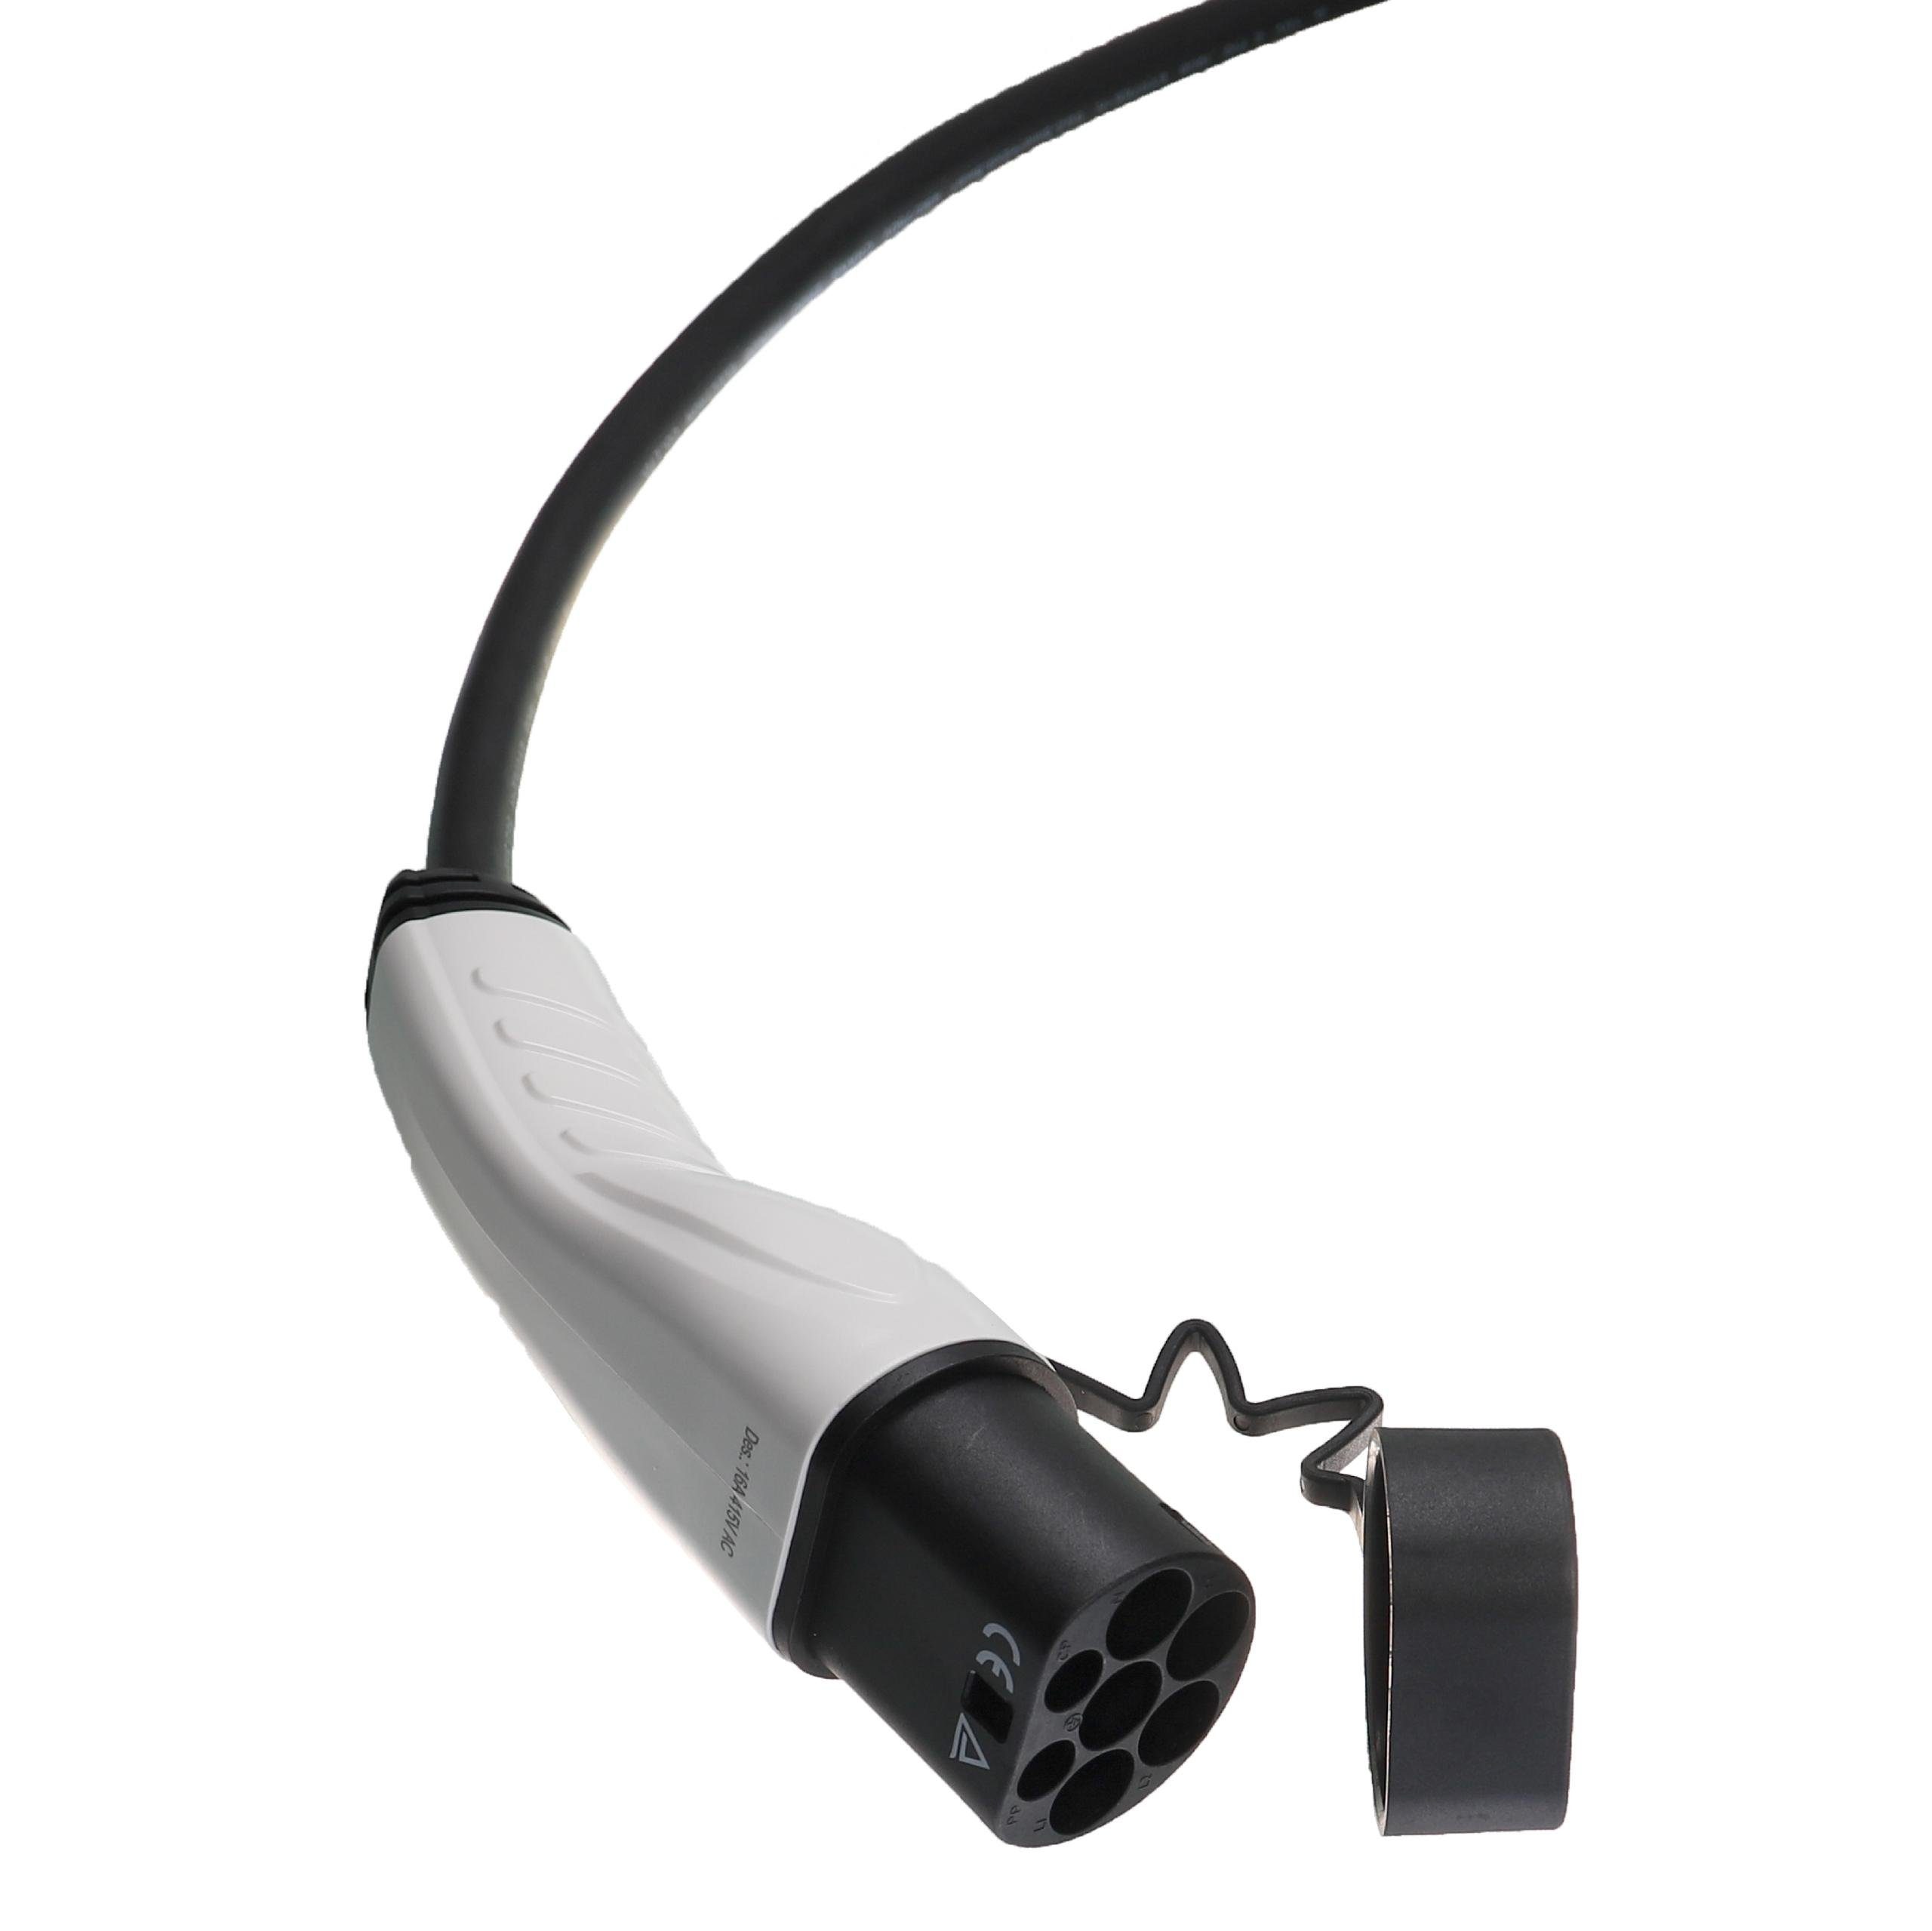 PHEV für passend Across Elektroauto Elektro-Kabel Plug-in-Hybrid vhbw / Suzuki